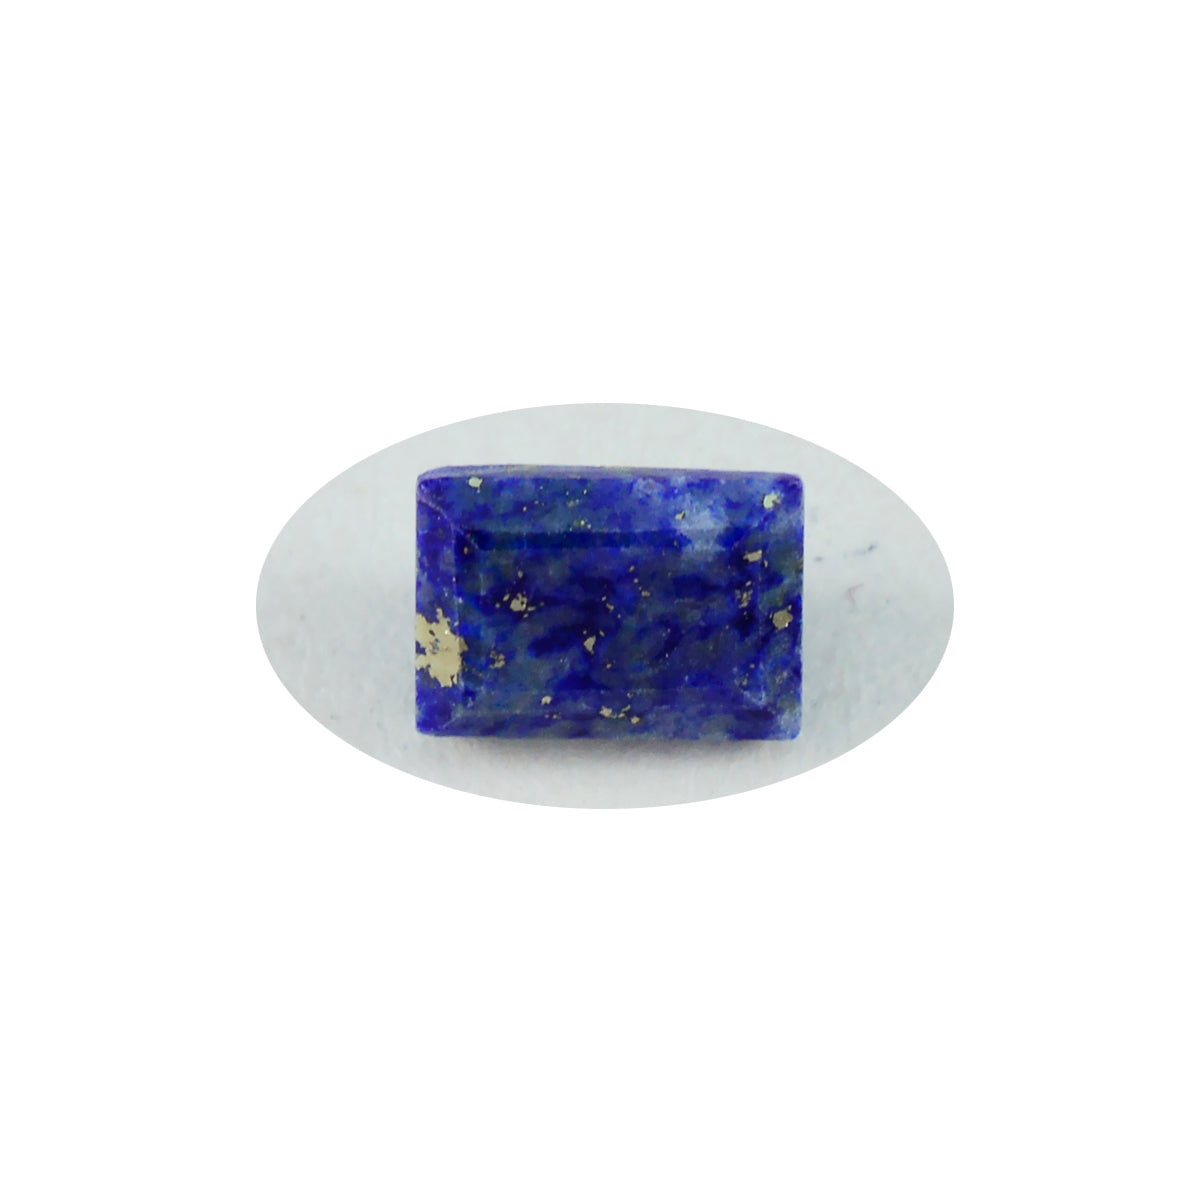 Riyogems 1PC Echte Blauwe Lapis Lazuli Facet 8x10 mm Achthoekige vorm, mooie kwaliteit losse edelstenen